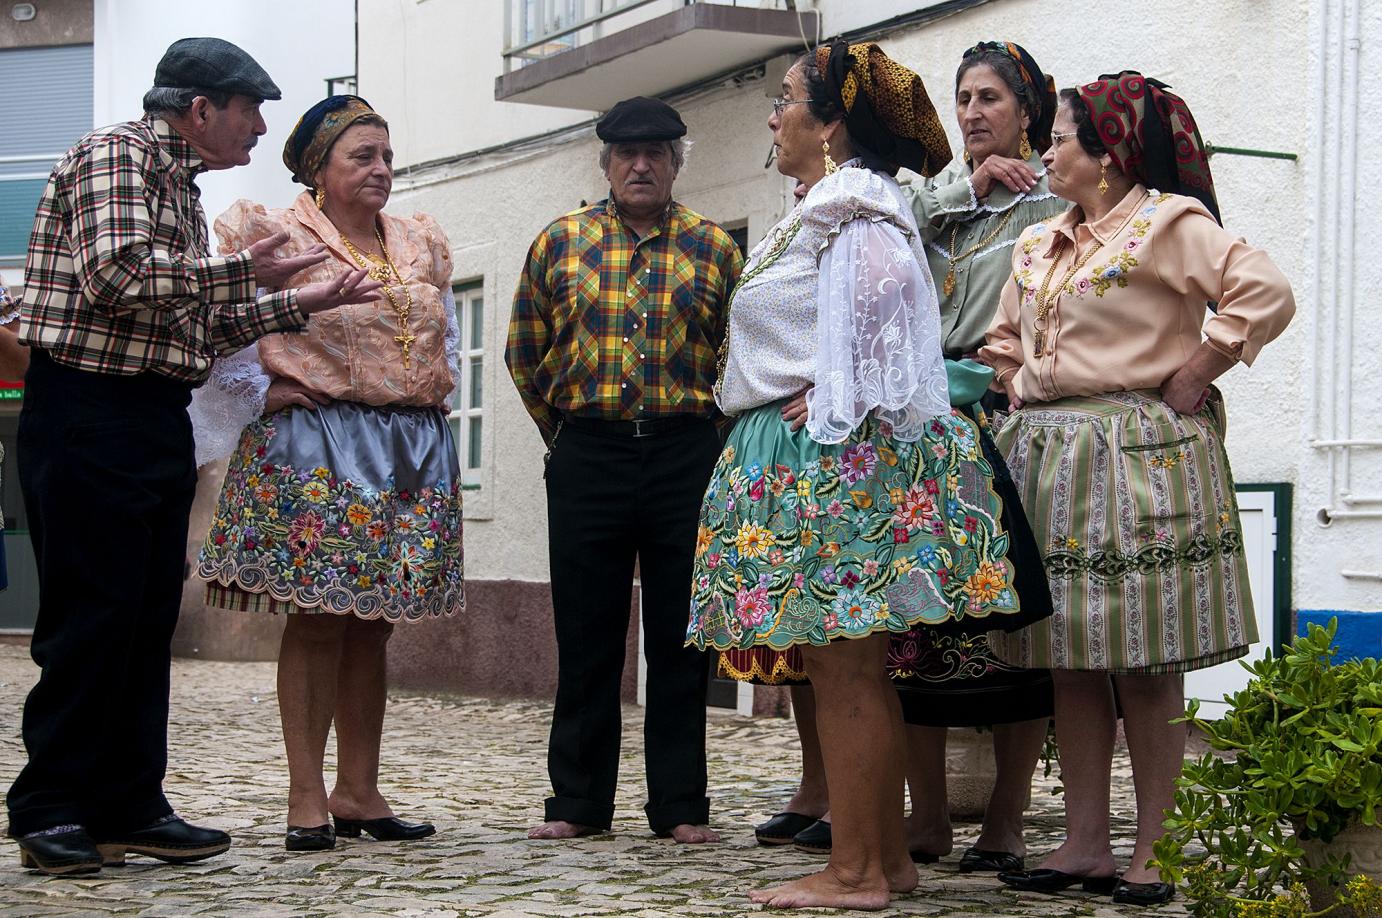 Festival de Folclore da Velha Guarda do Folclore da Nazaré